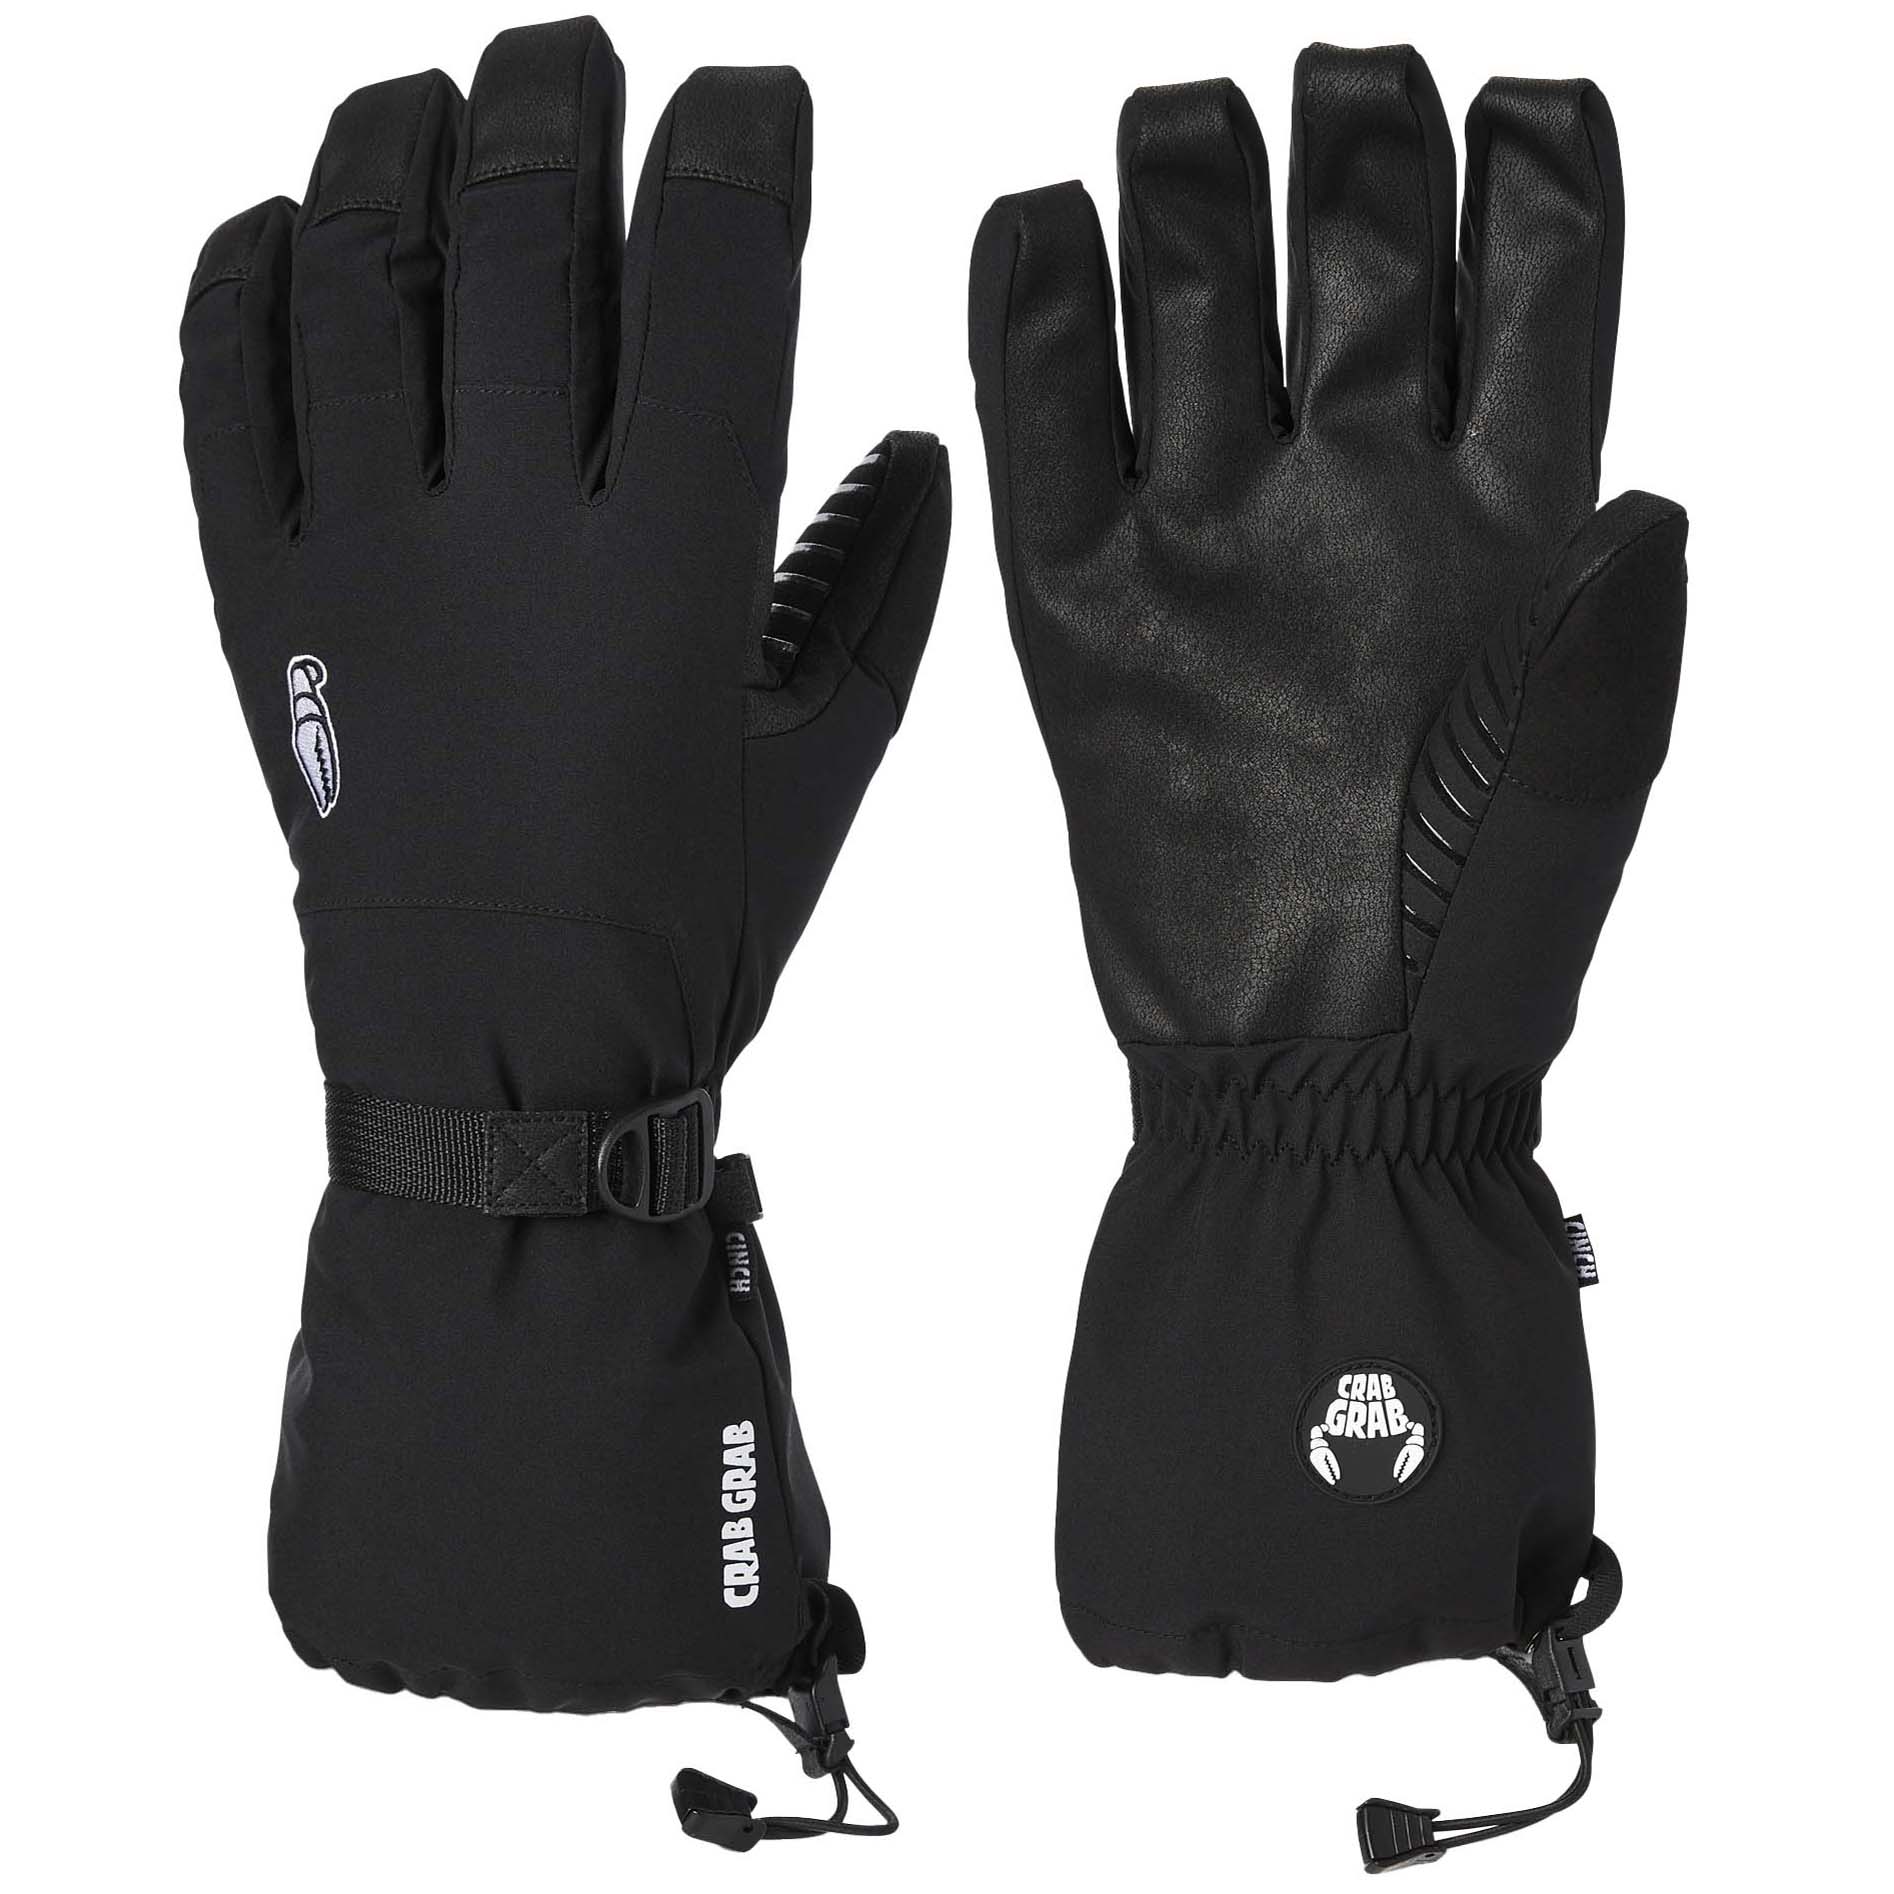 Crab Grab Cinch Glove Snow Gloves - Black